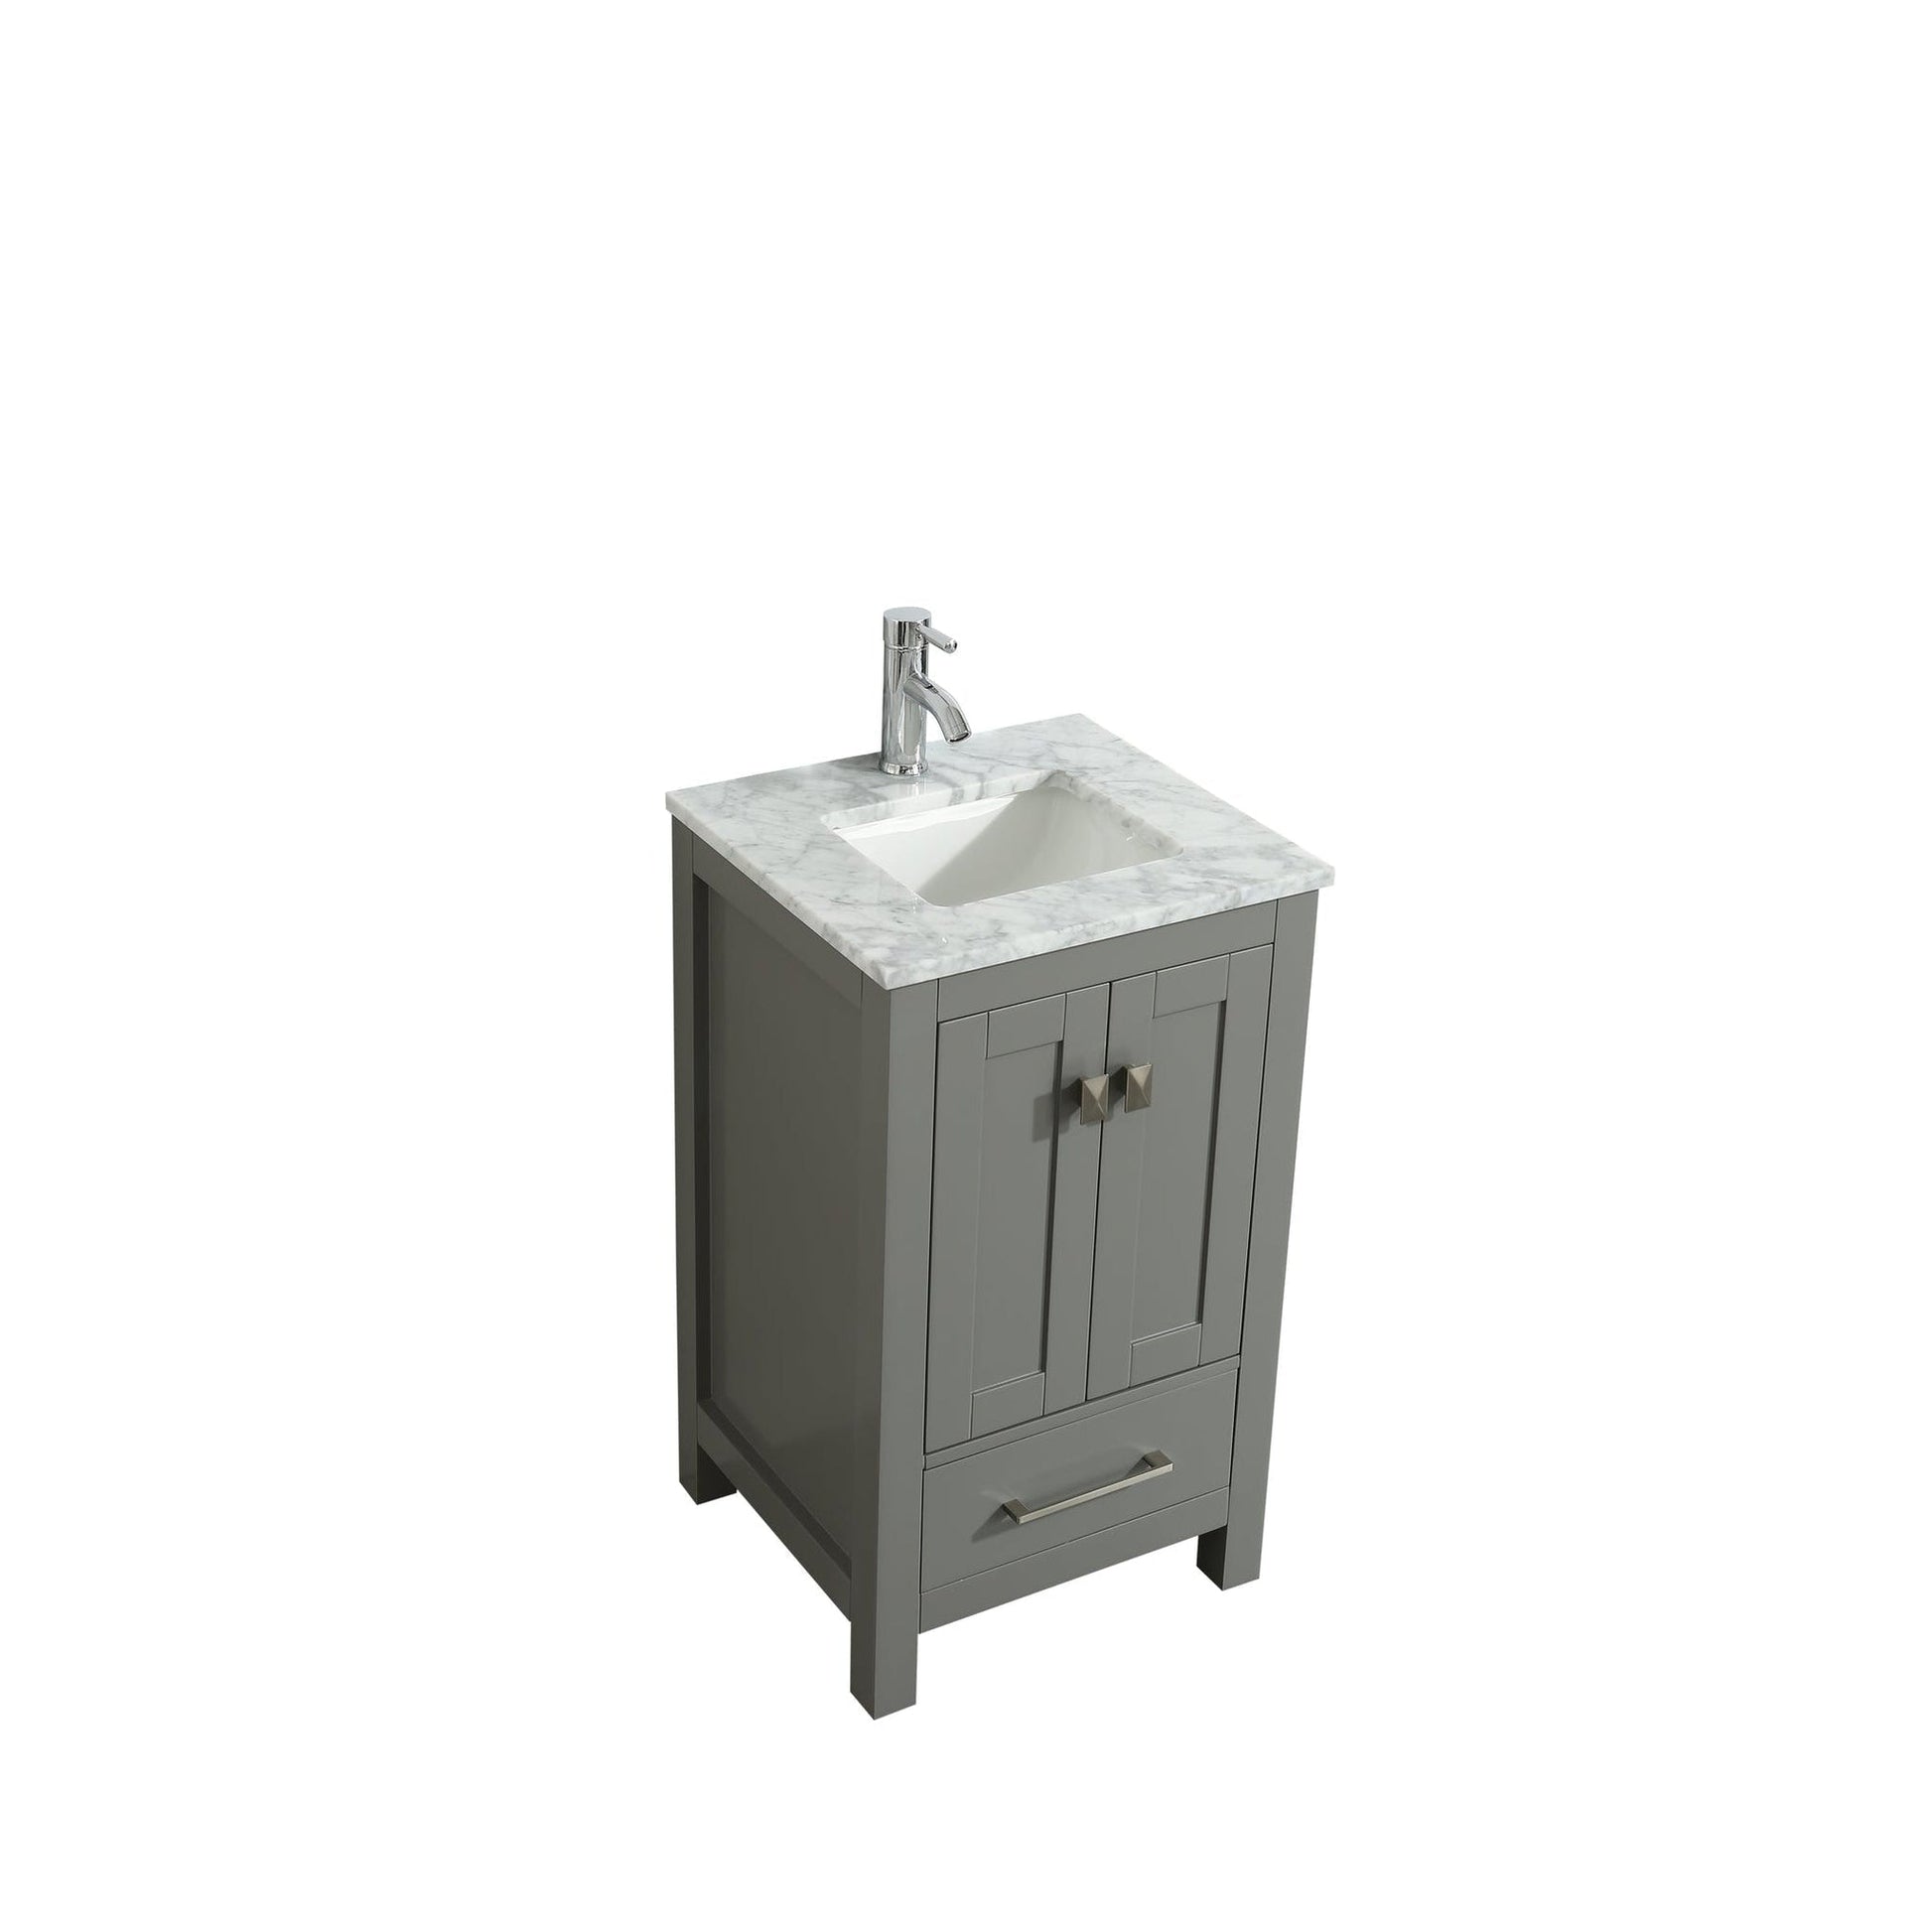 Eviva London 24" x 34" Gray Freestanding Bathroom Vanity With Carrara Marble Countertop and Single Undermount Sink